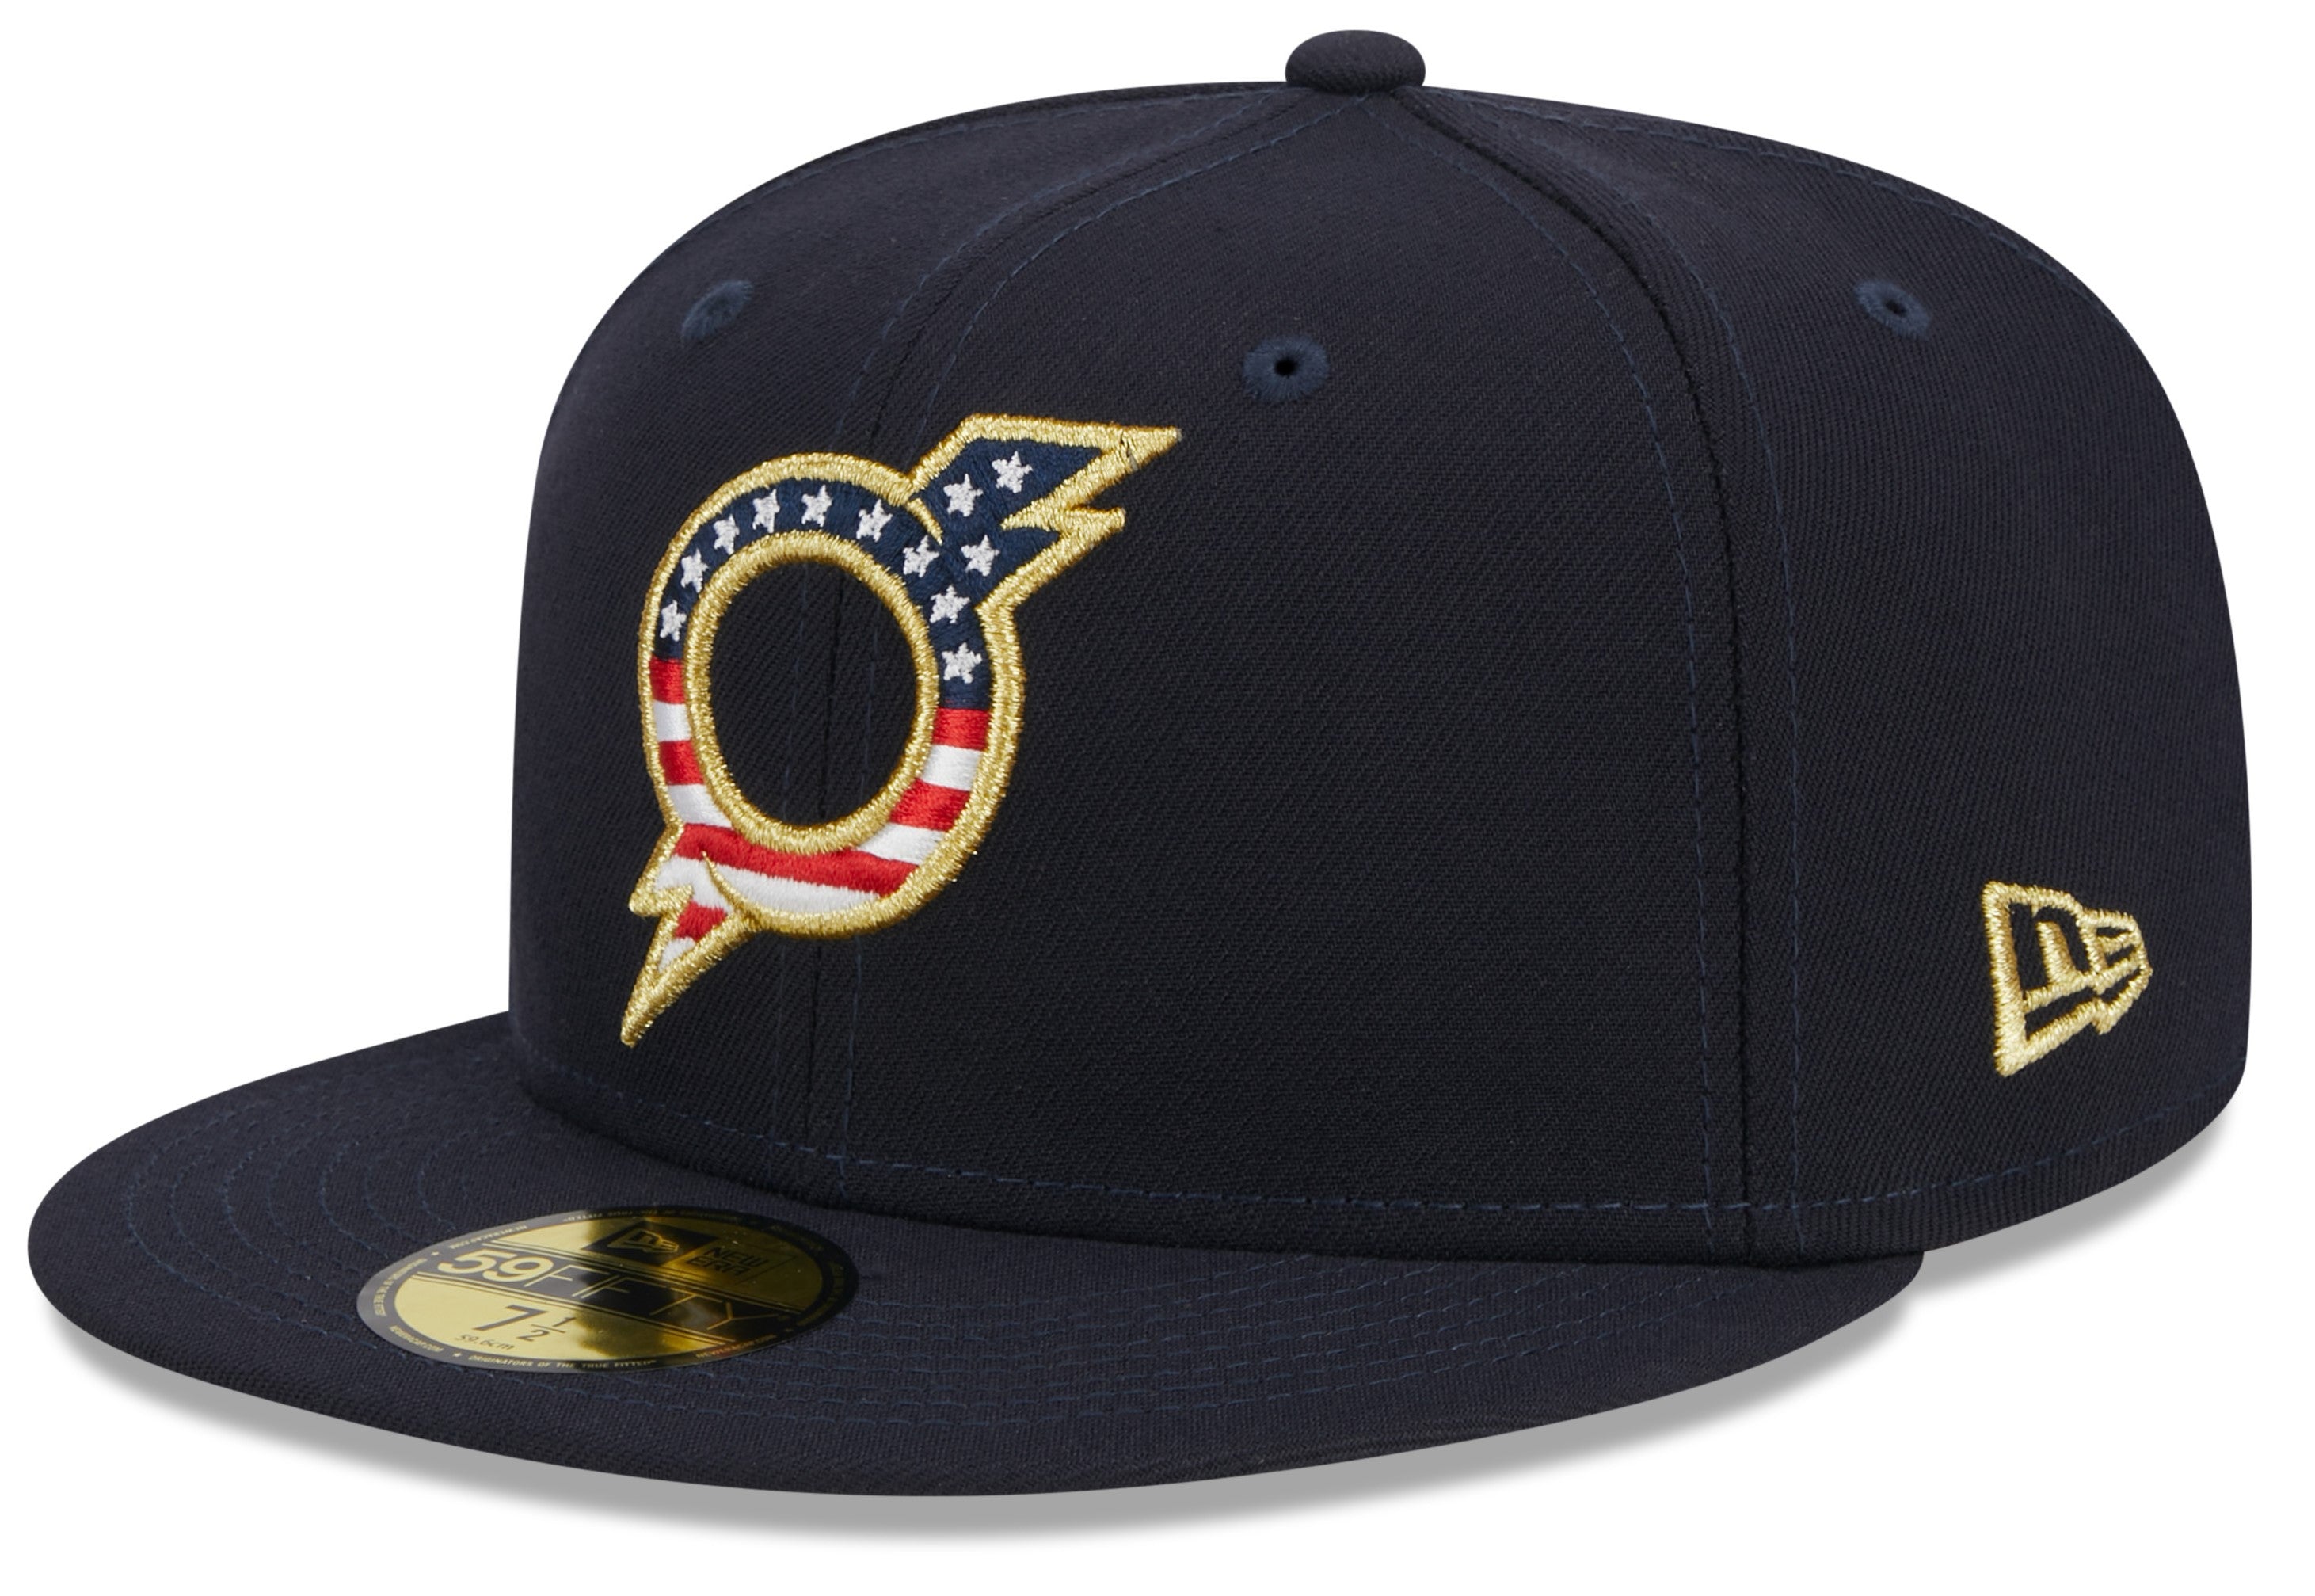 Toronto Blue Jays redesign Fourth of July hats, remove stars - Toronto